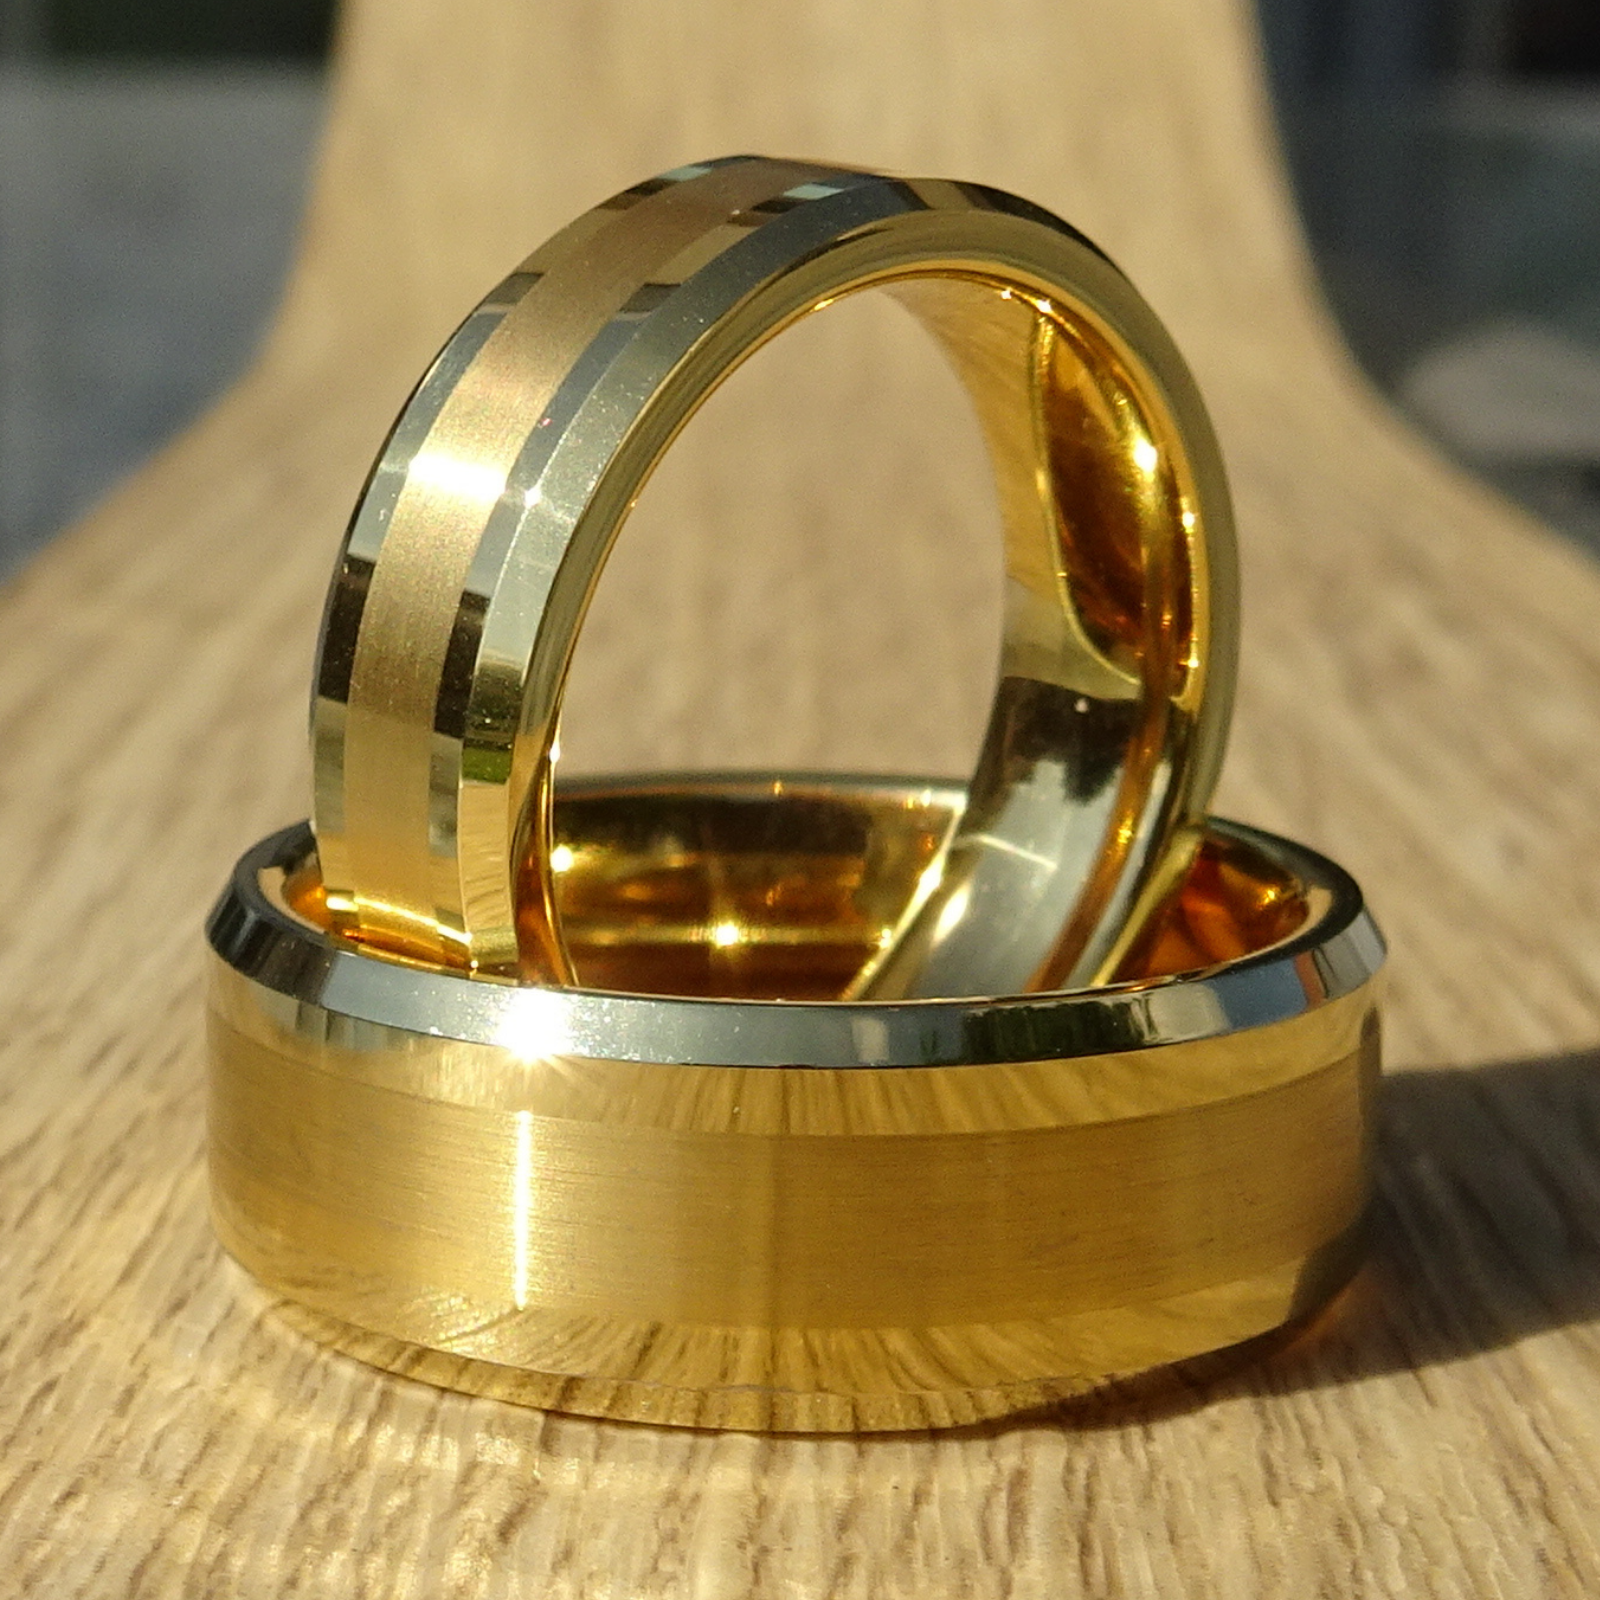 The Gold Brushed Wonder Ring Set